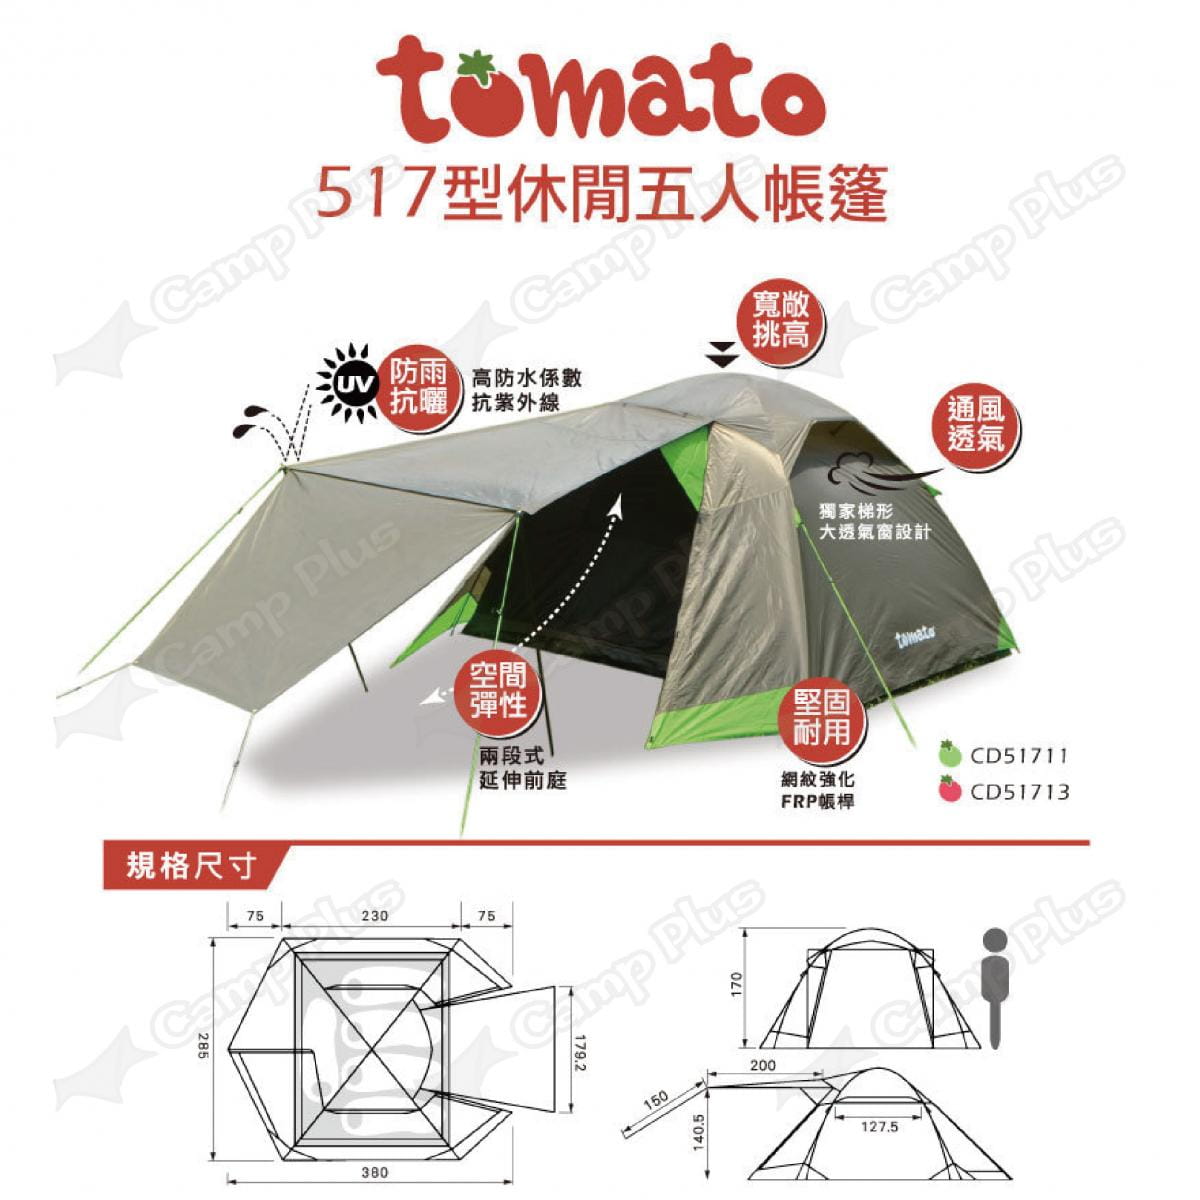 【好野 Outthere】Tomato 517型休閒五人帳篷 (悠遊戶外) 6